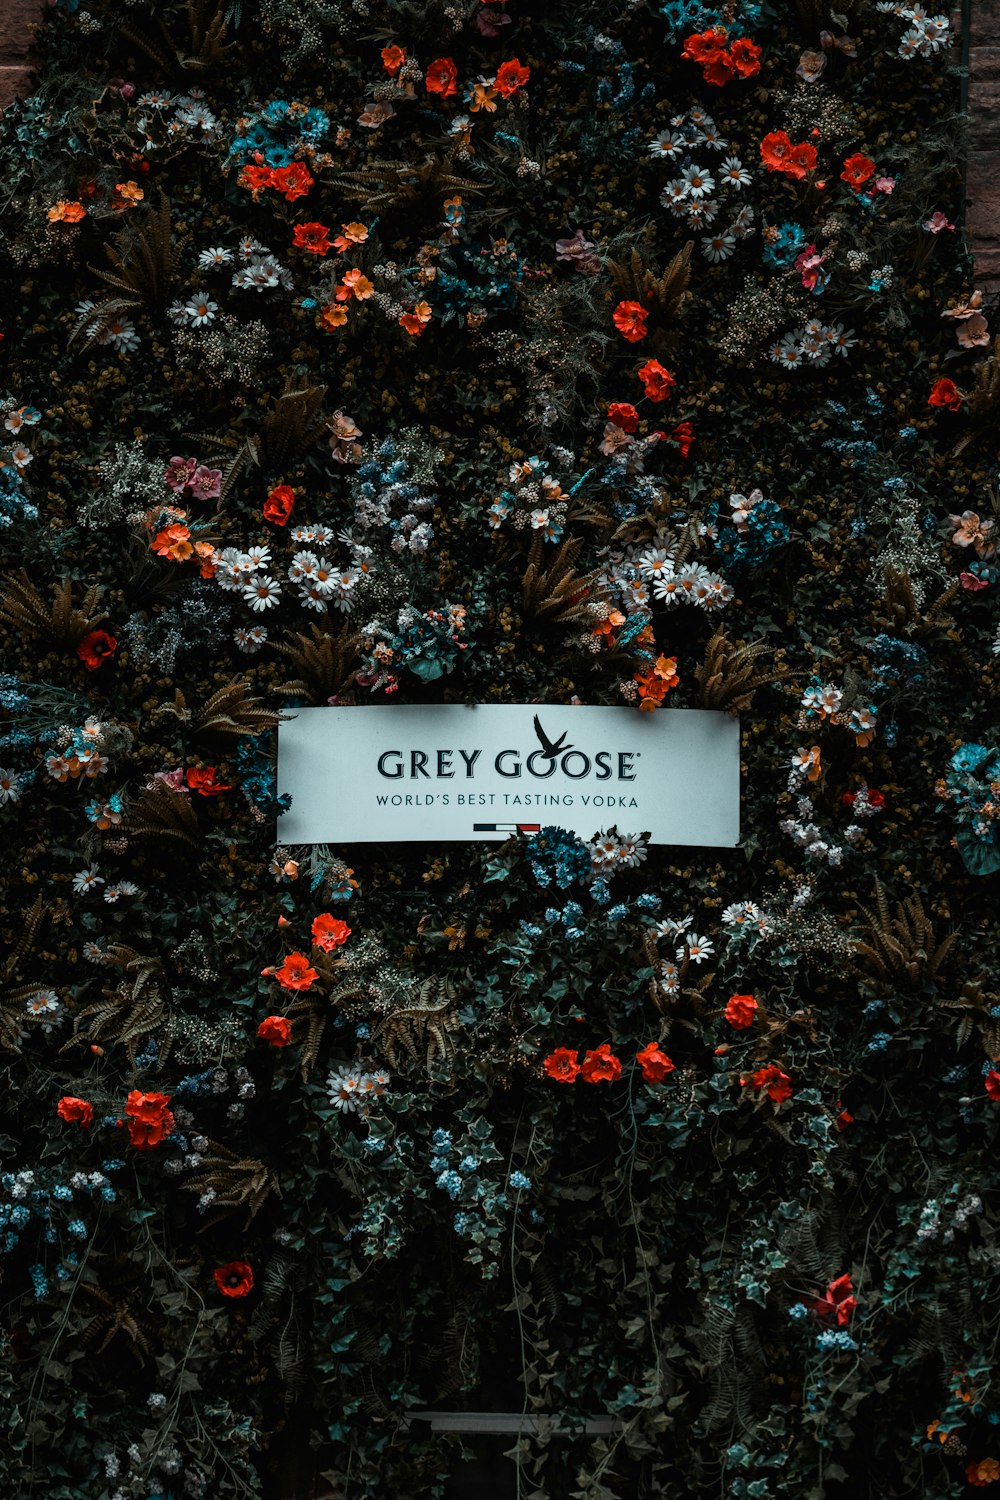 Grey Goose signage